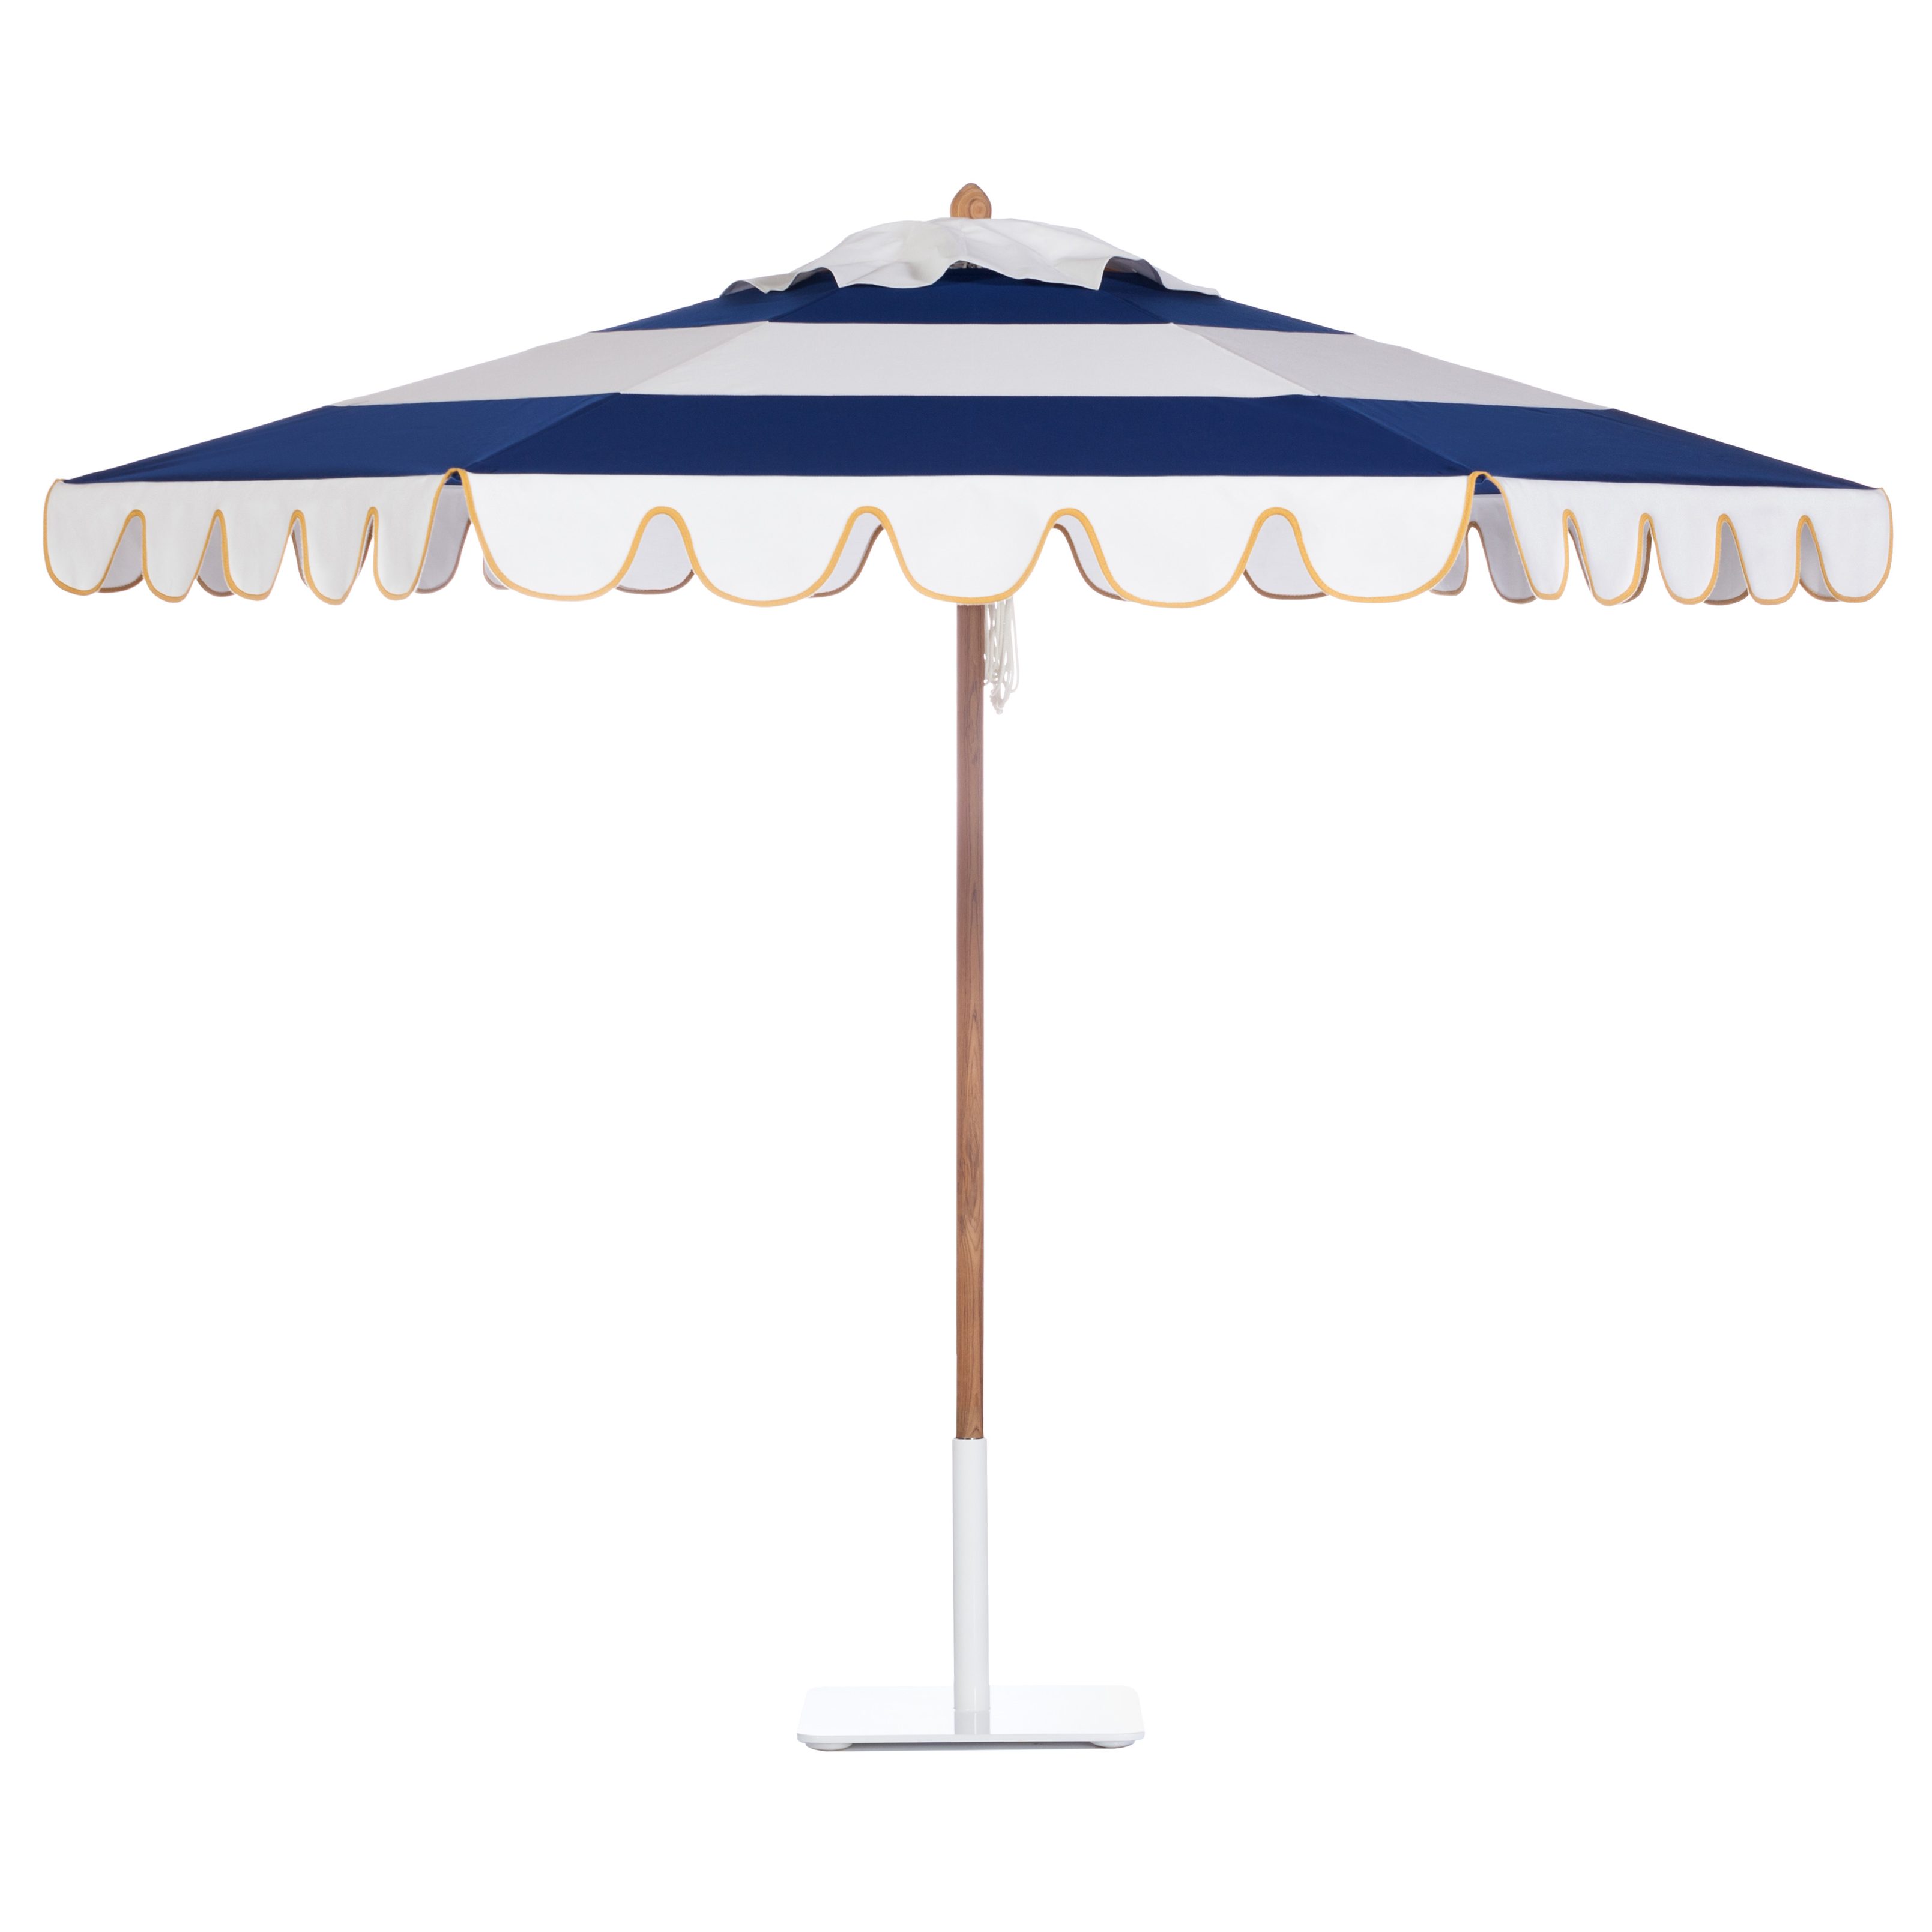 Whitecap / Navy Umbrella Image